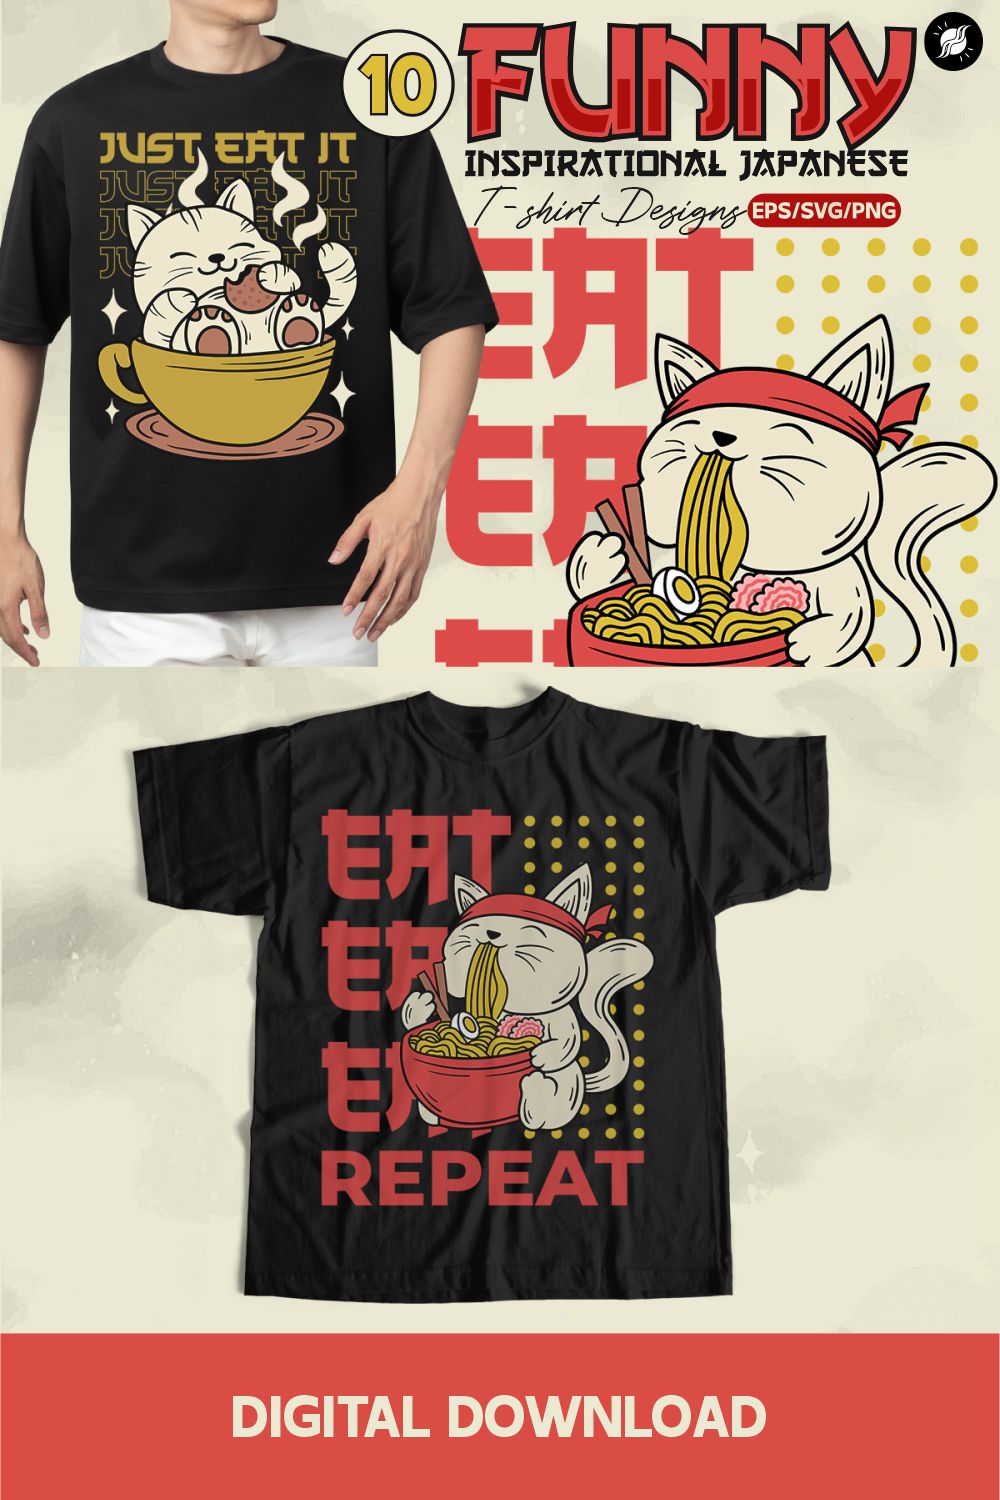 Retro Funny Japanese T-shirt Designs Bundle pinterest preview image.